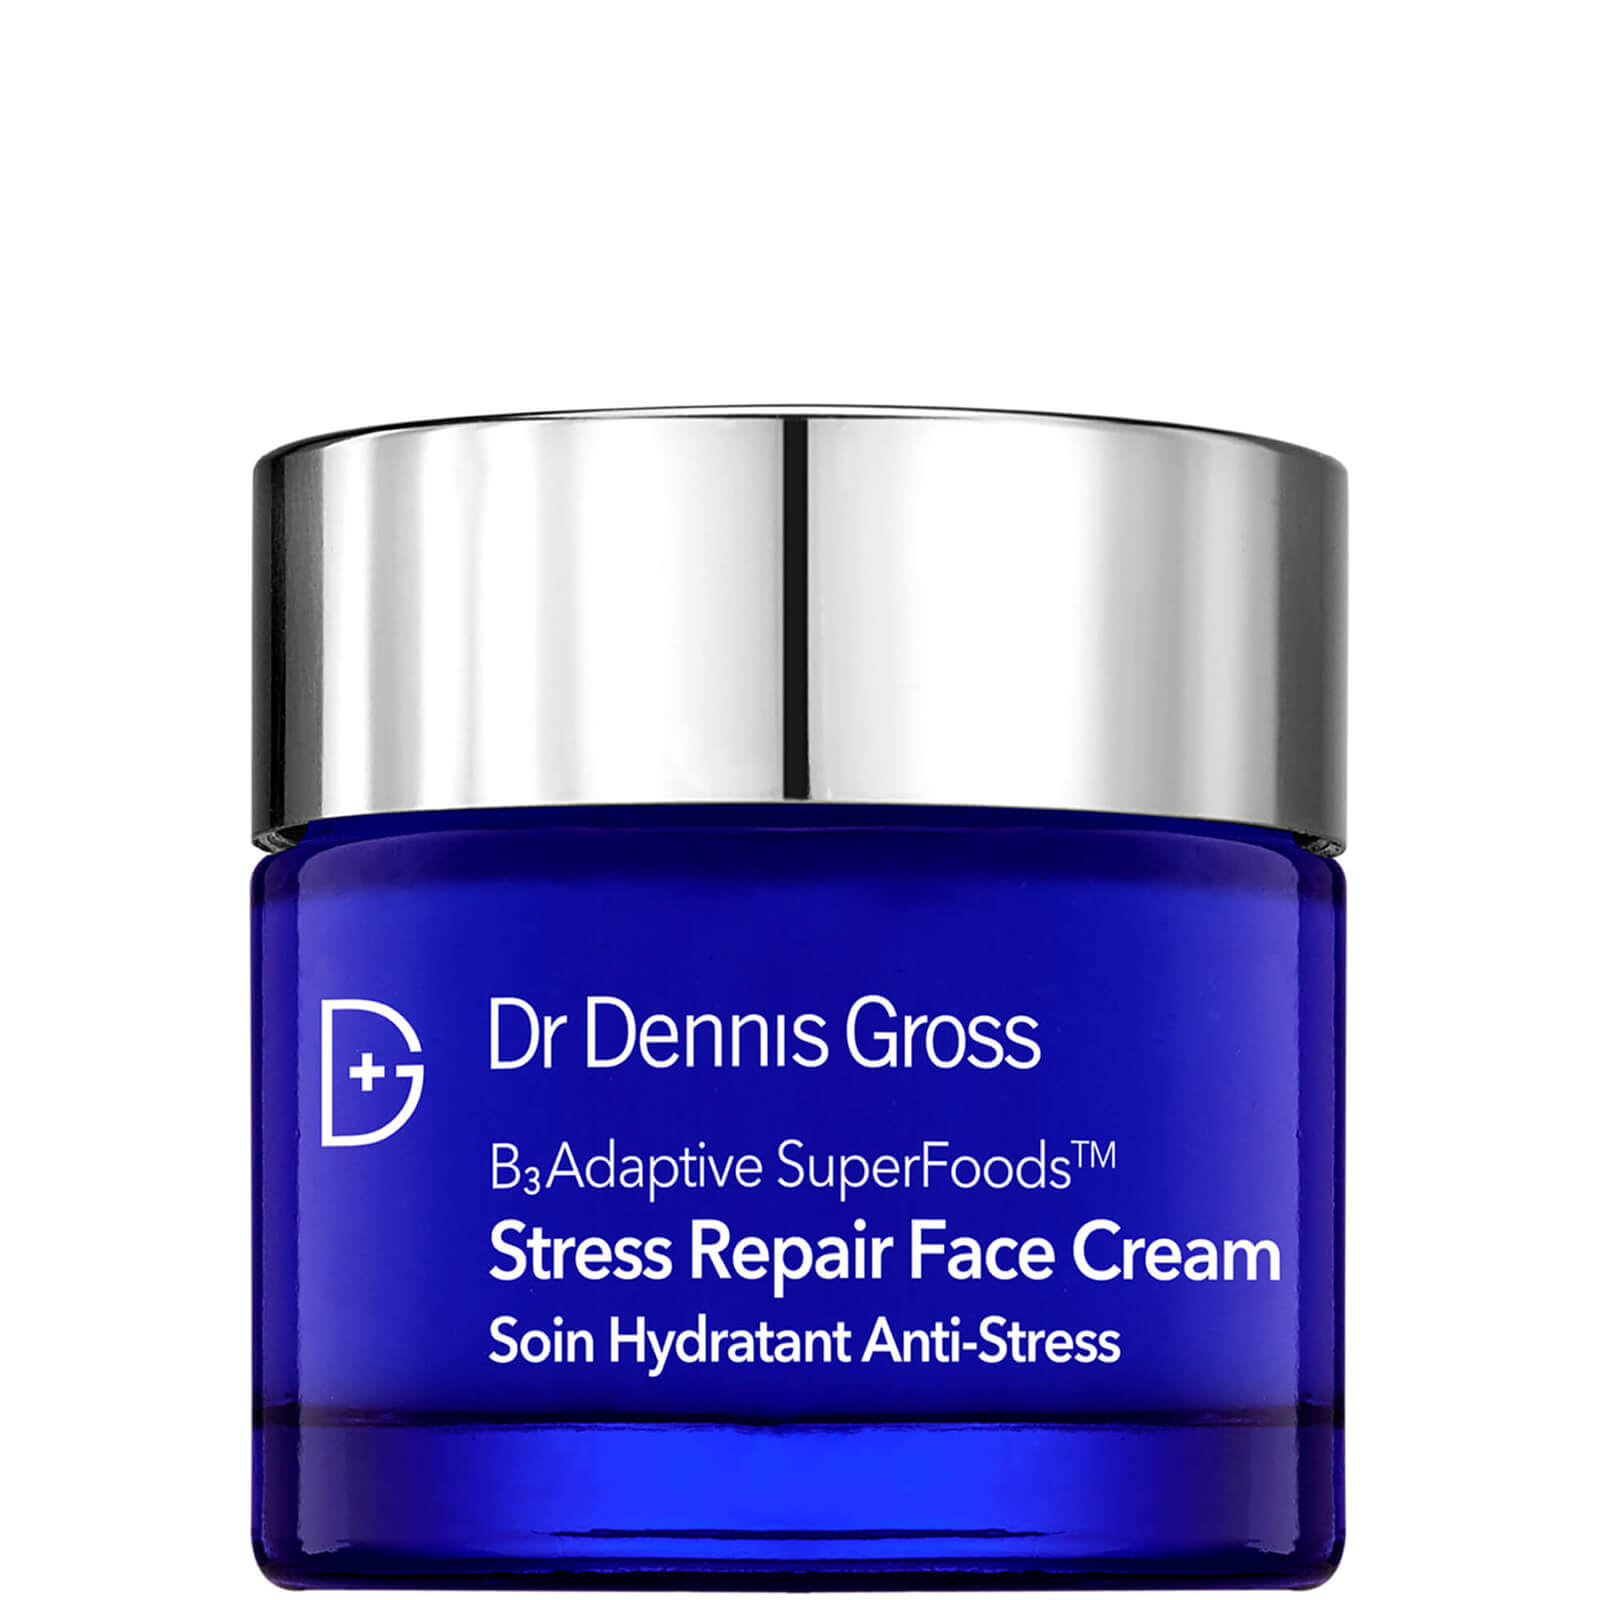 Dr Dennis Gross Skincare B3Adaptive Superfoods Stress Repair Face Cream 60ml lookfantastic.com imagine